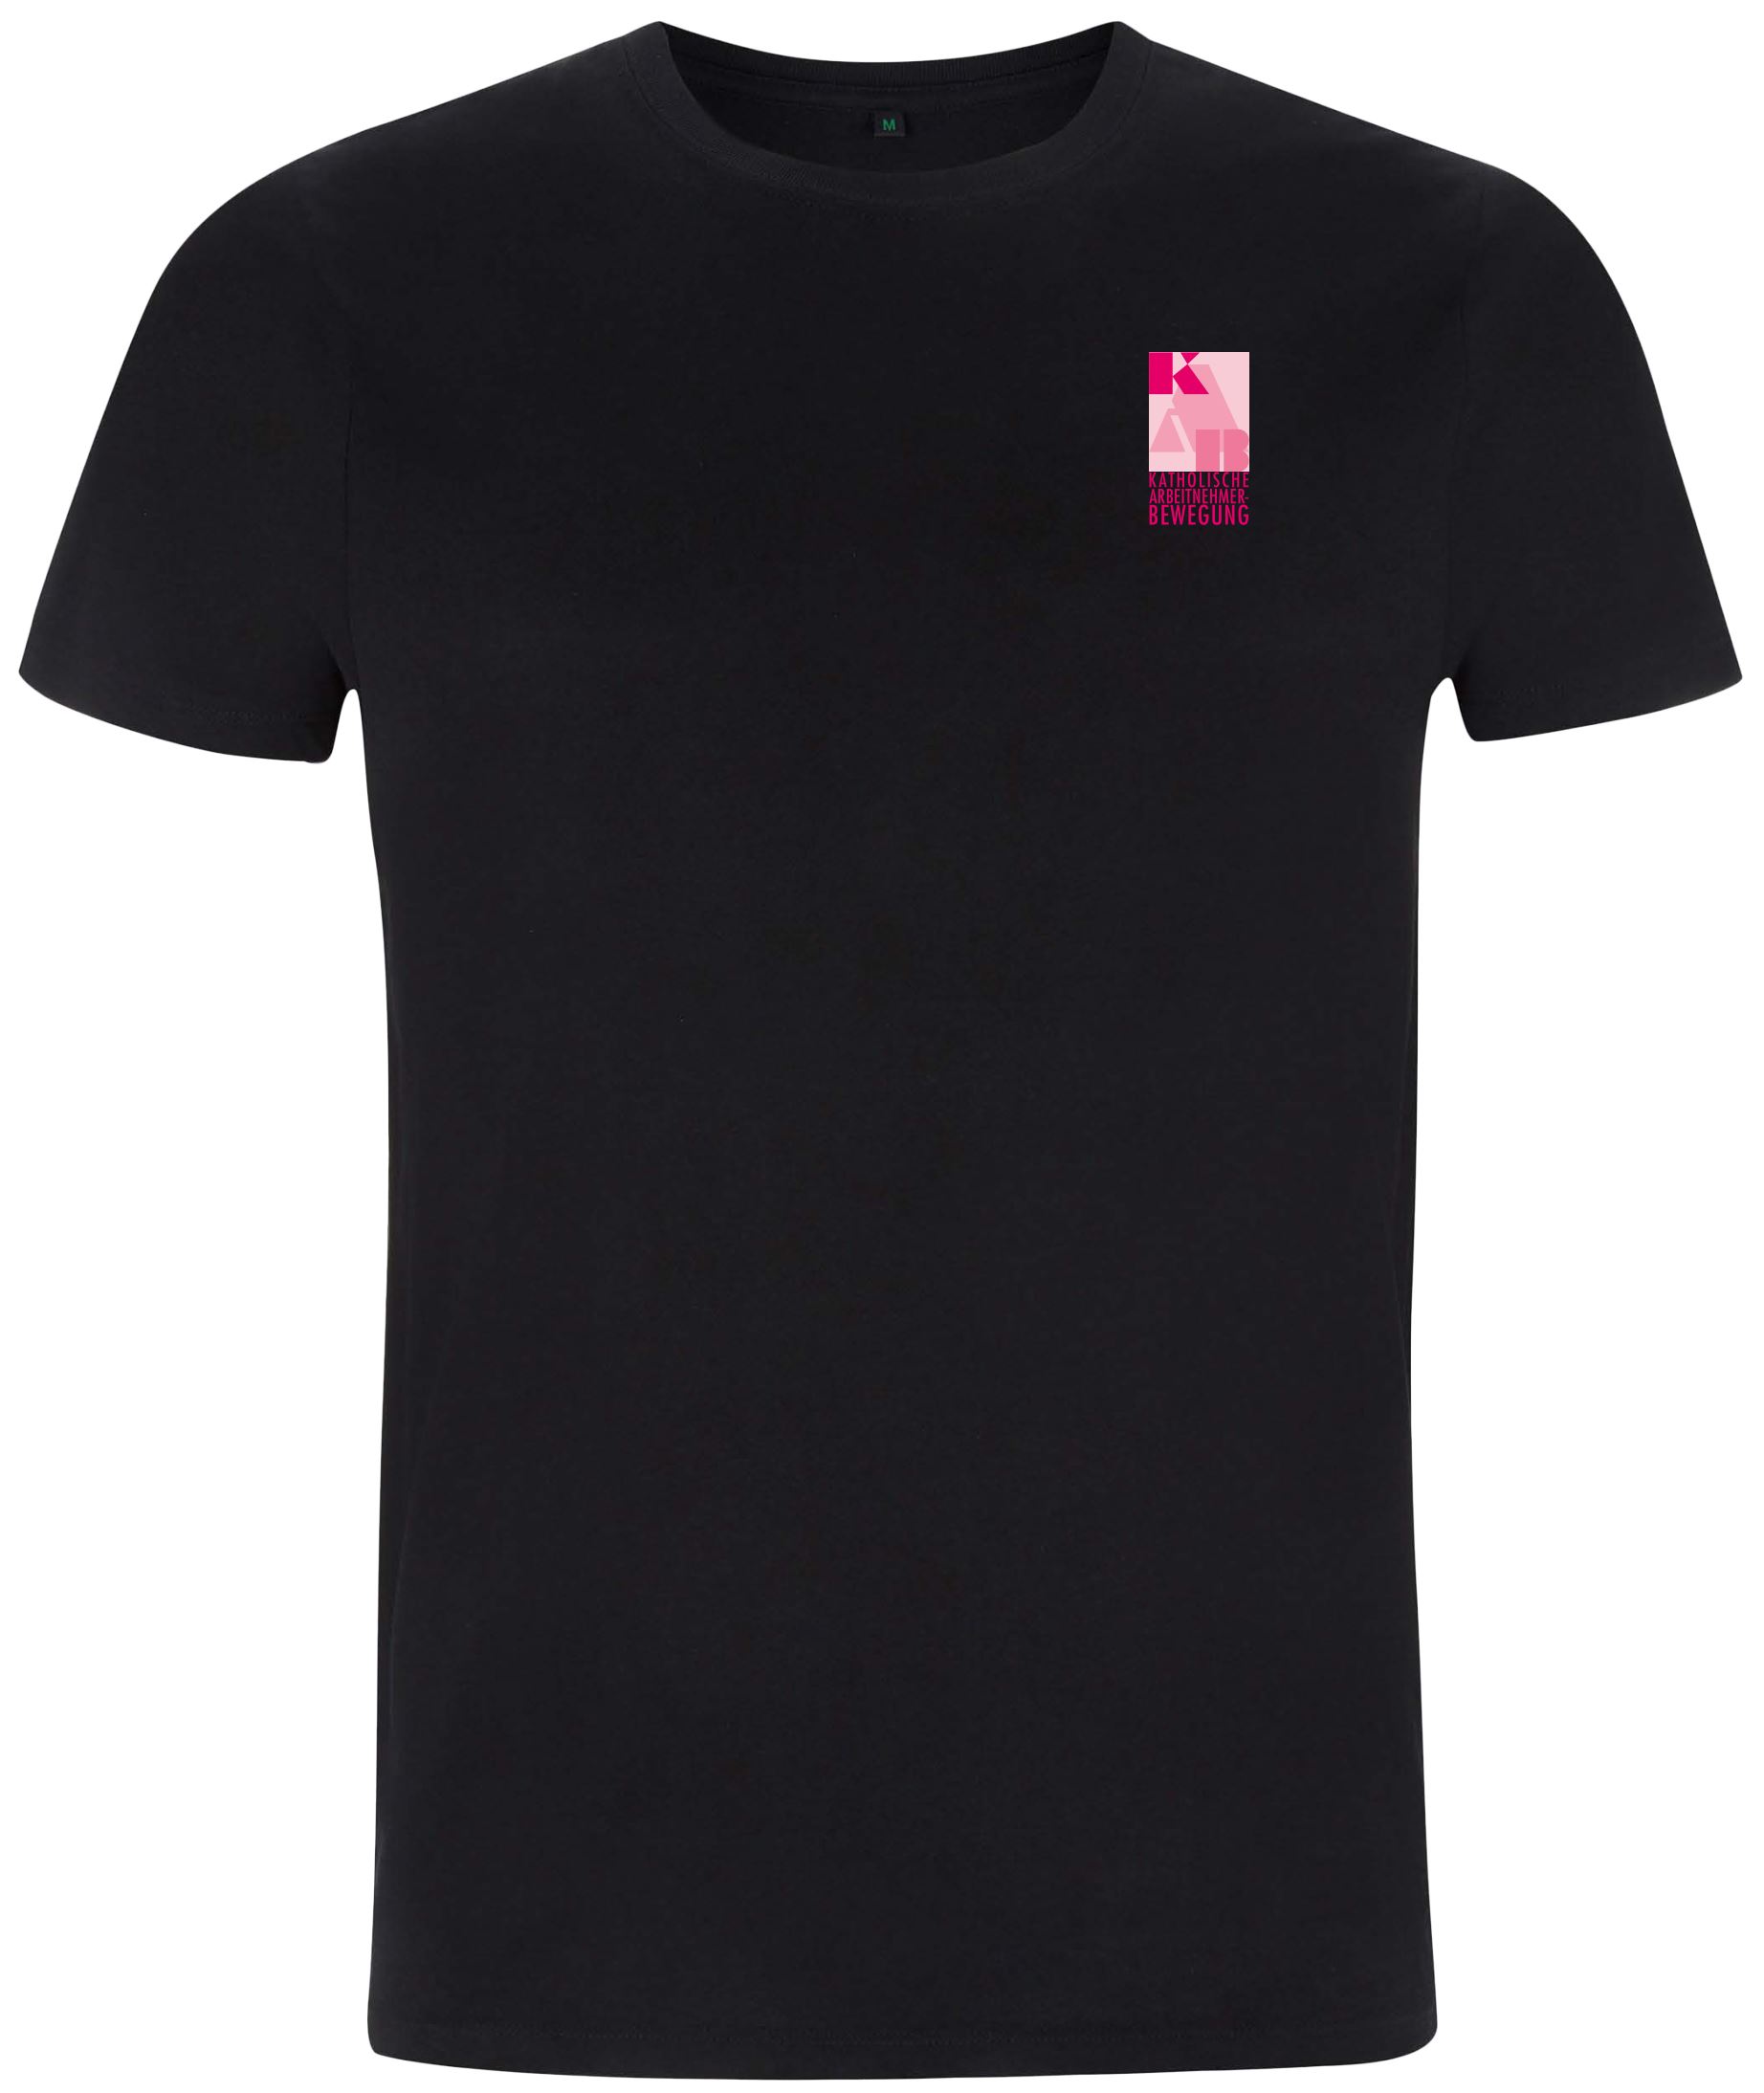 KAB T-Shirt schwarz mit Kampagnenmotiv Gr. L